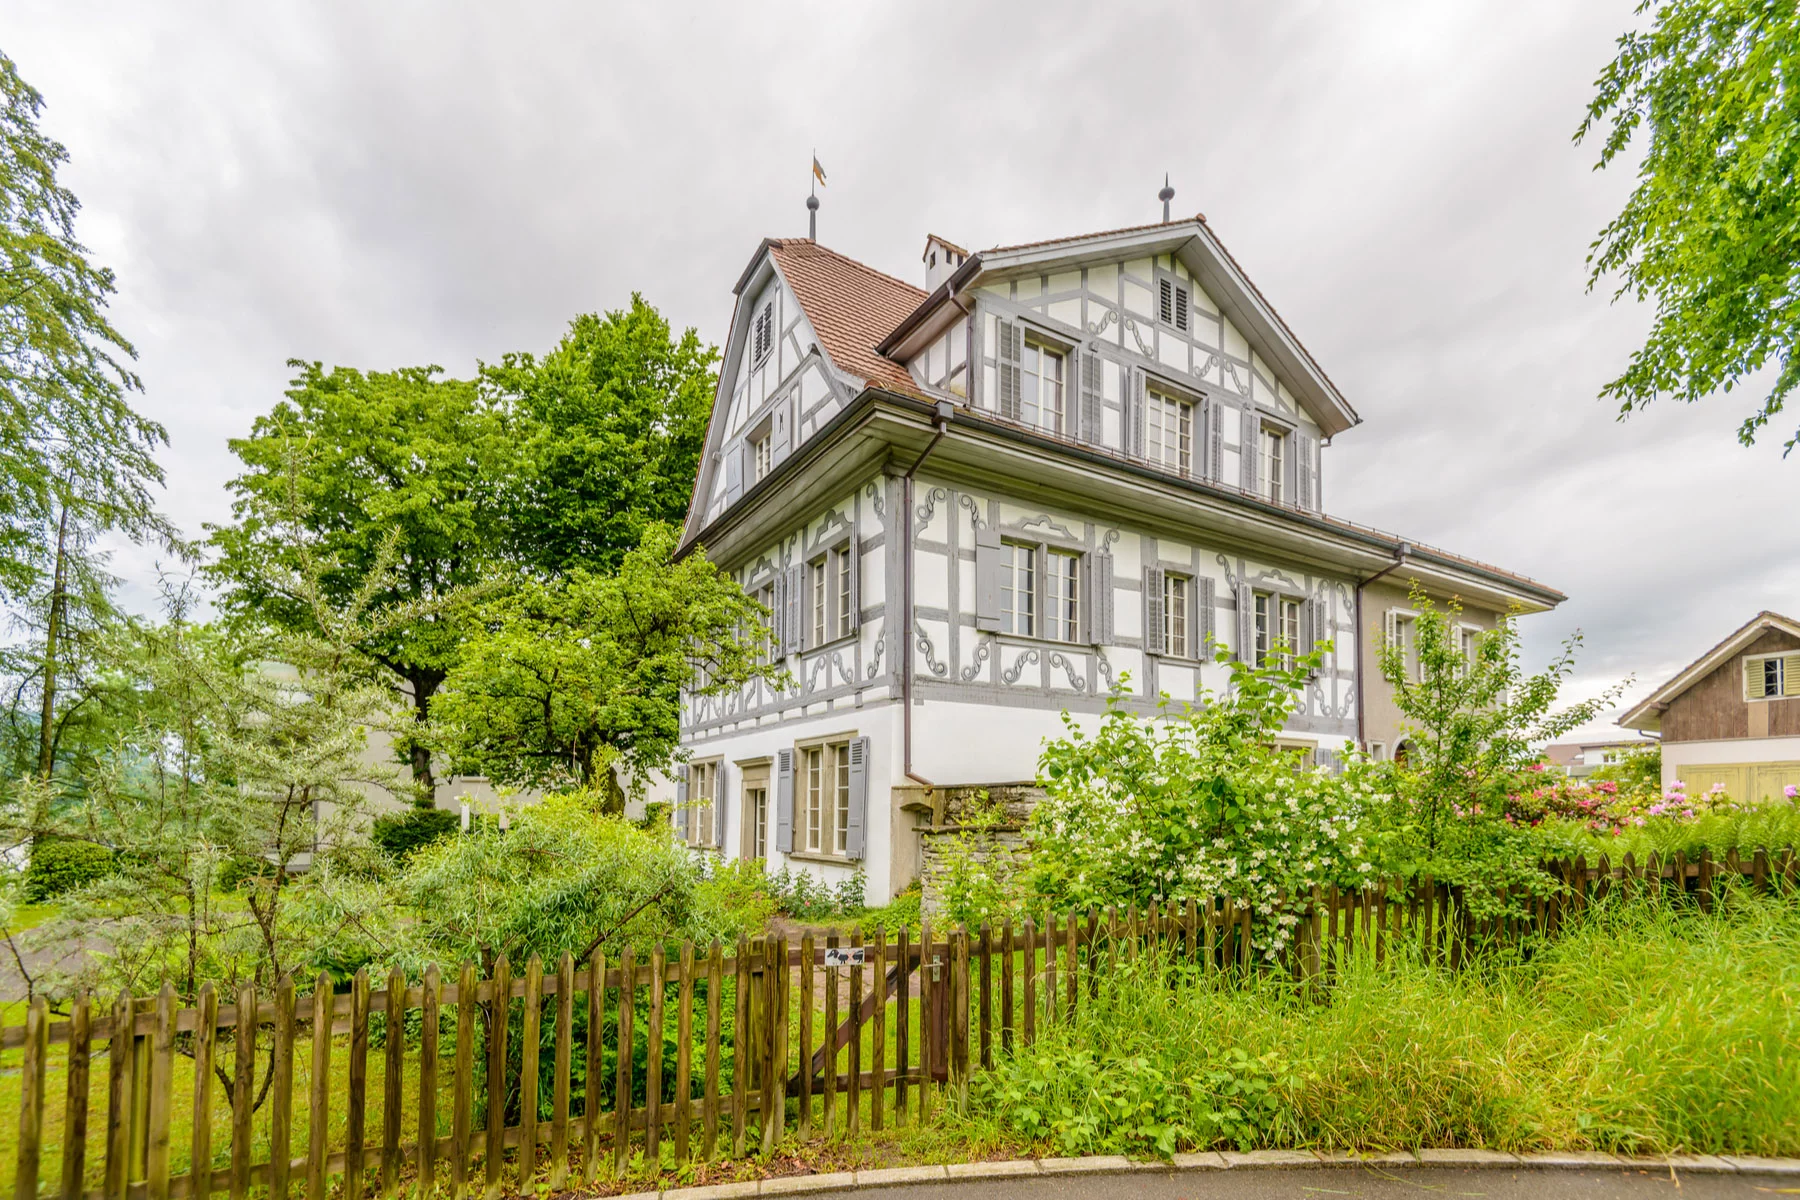 Historic Swiss house